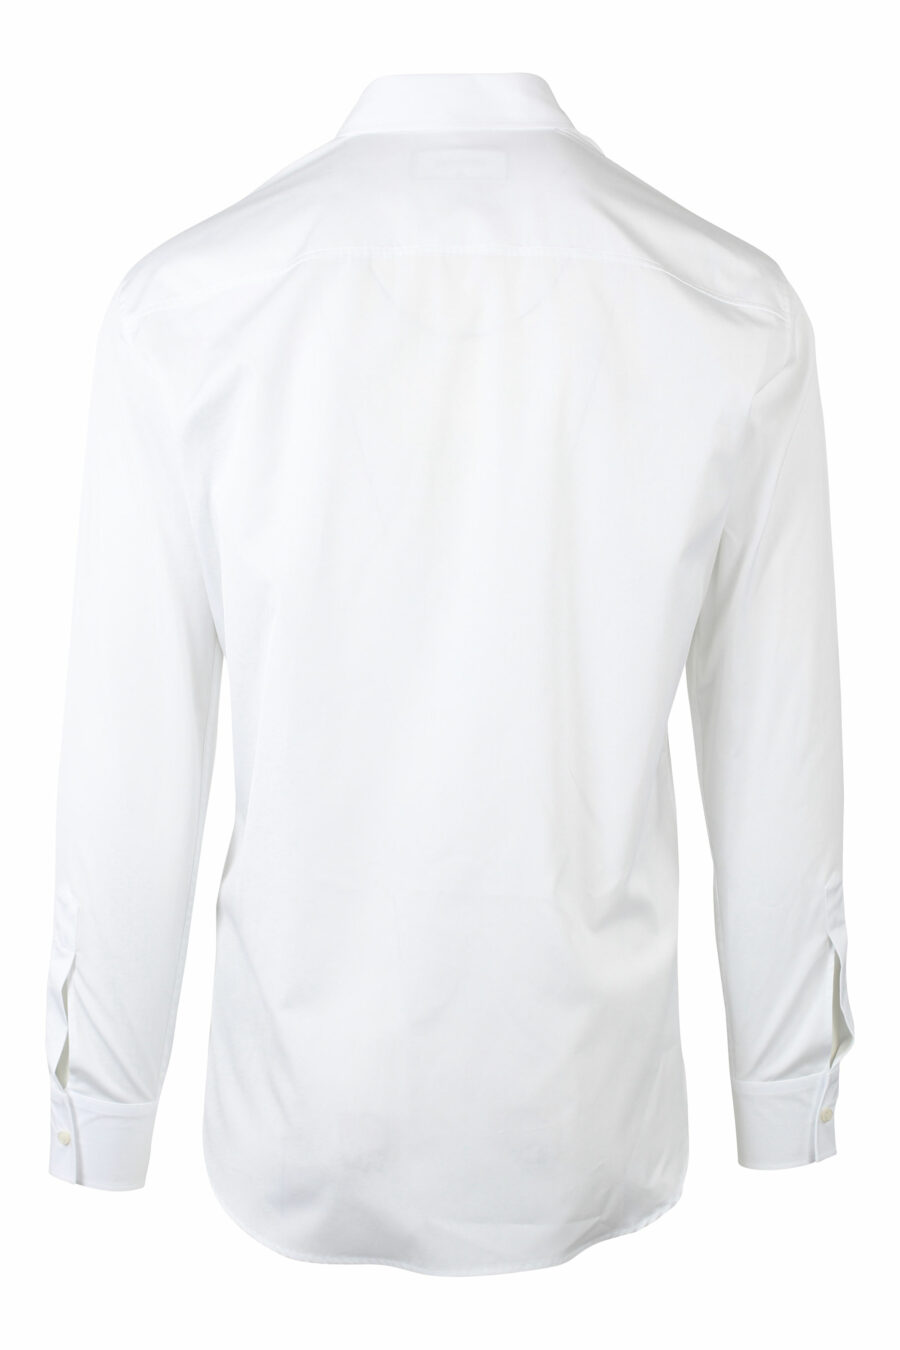 Camisa branca com logótipo duplo vertical "ícone" - IMG 0785